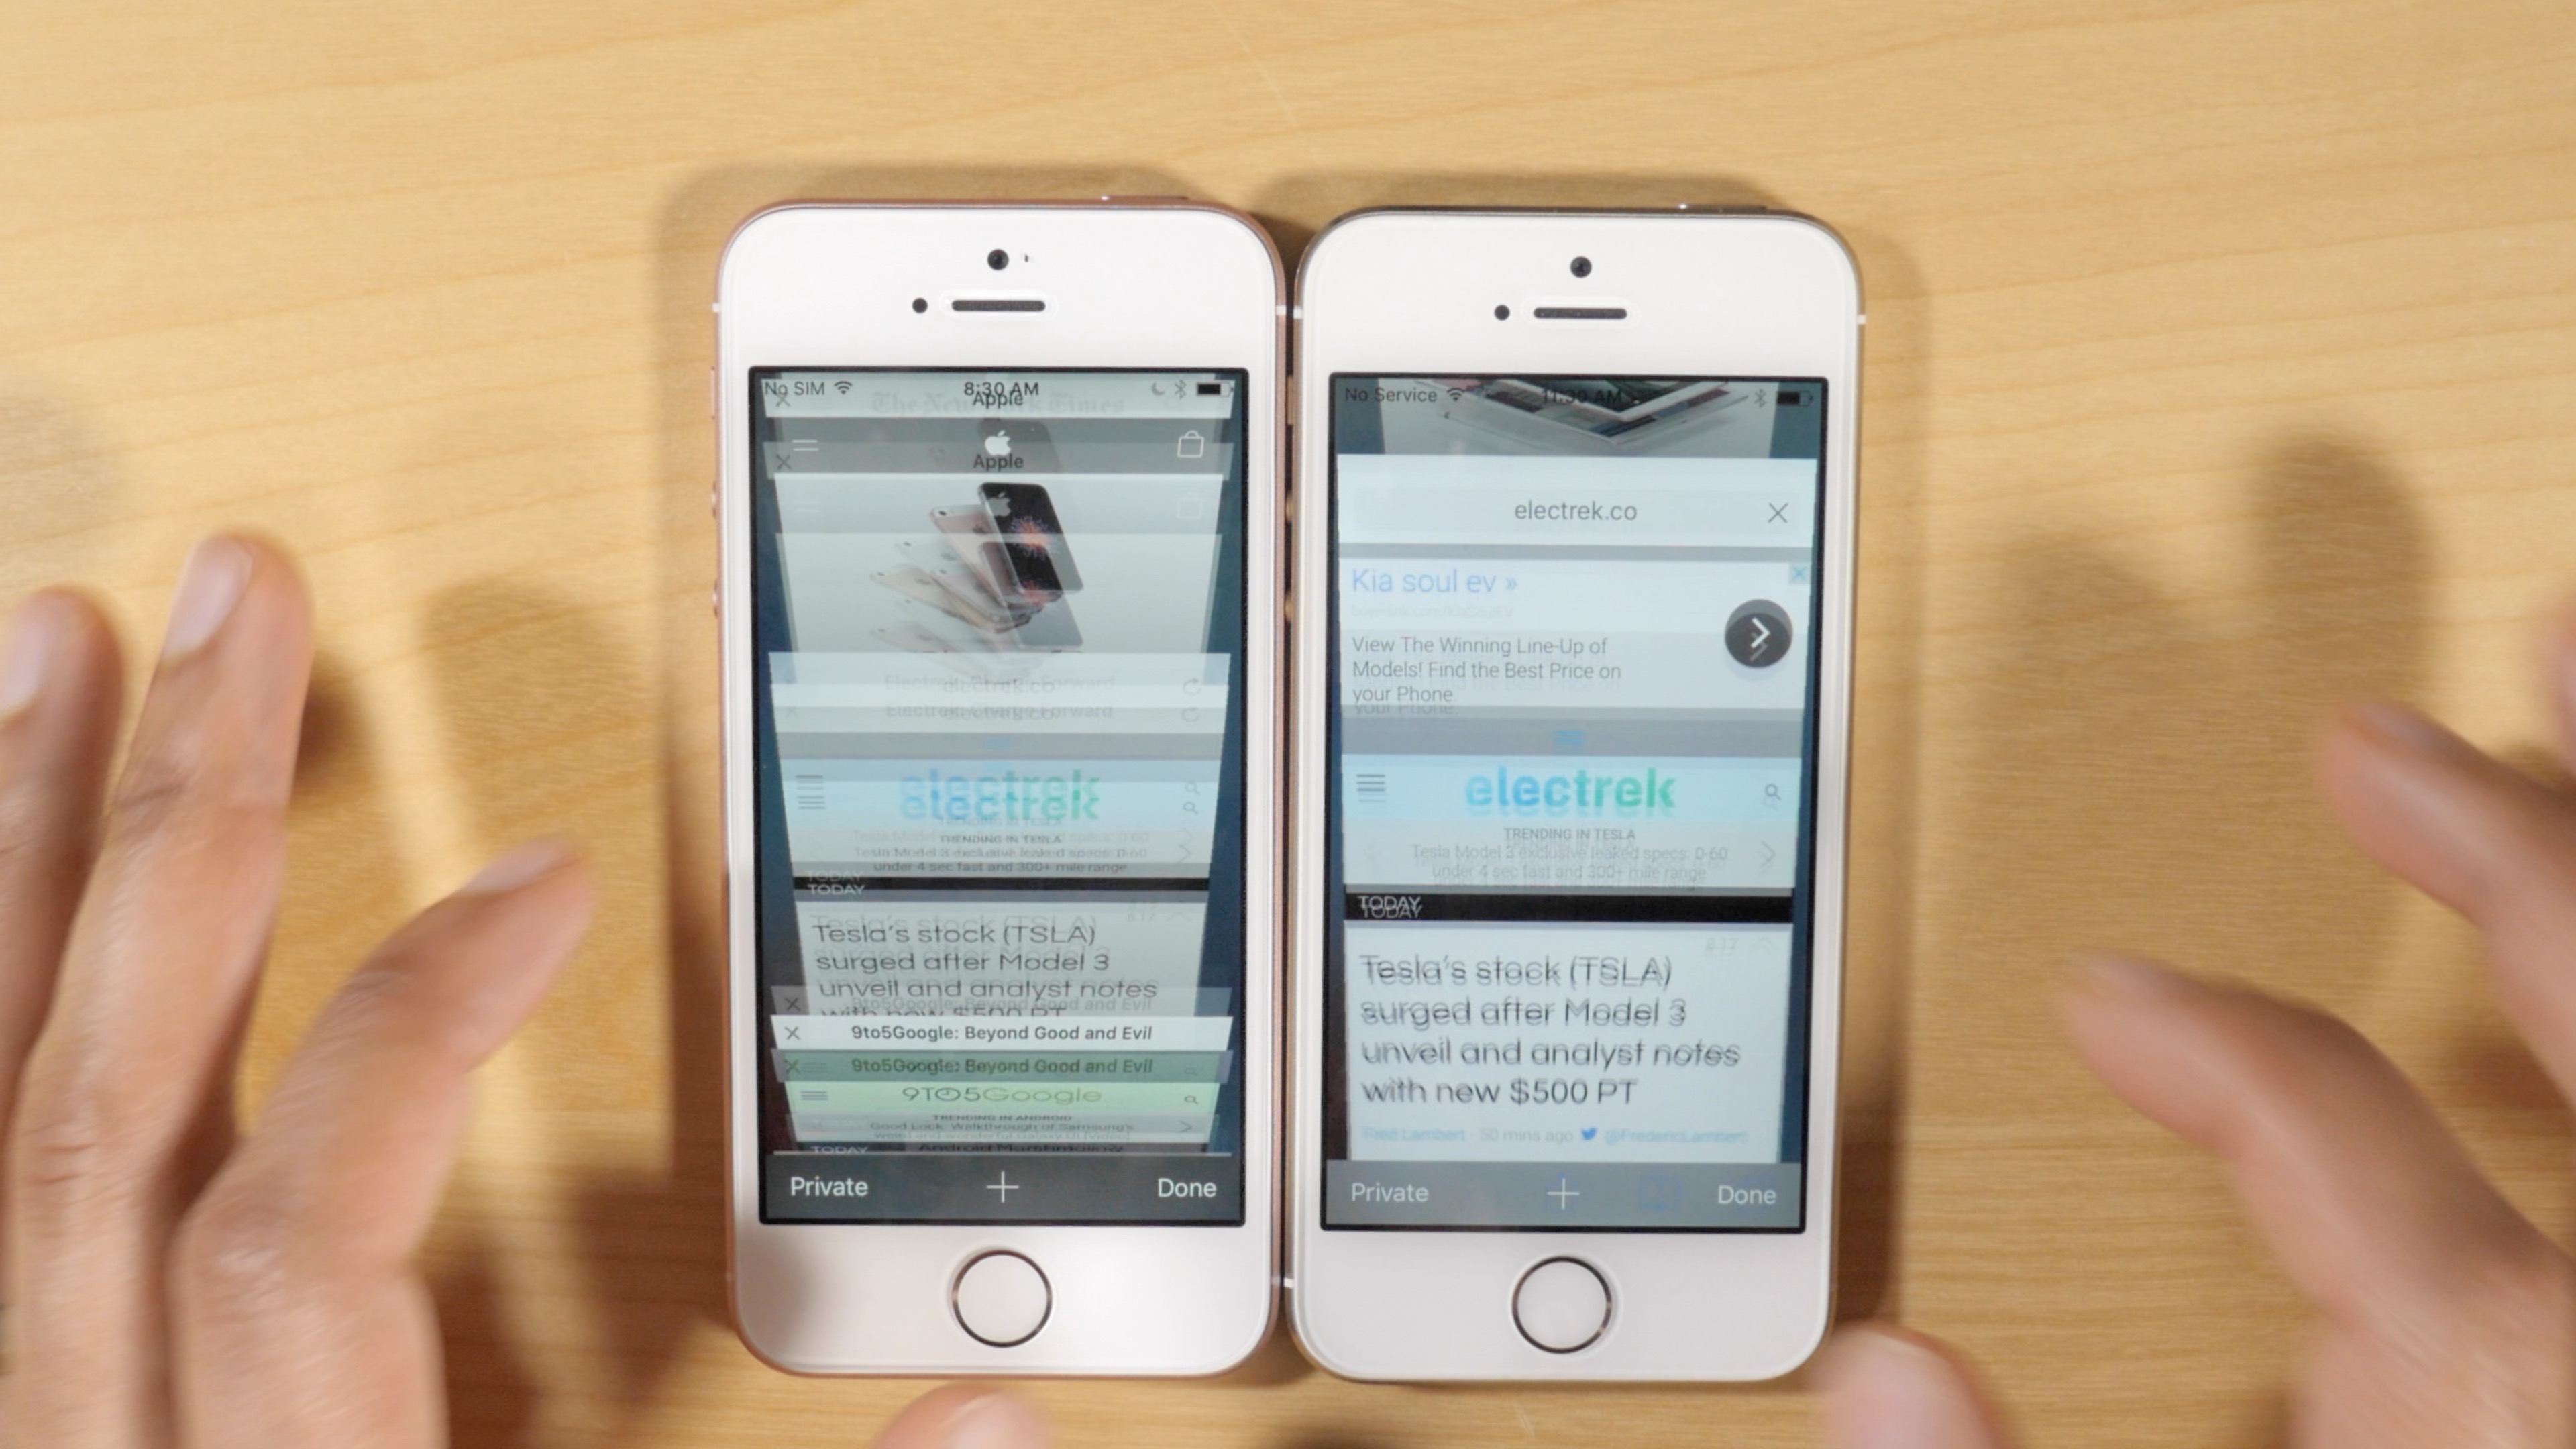 Video: Trollean al diferenciar un iPhone SE de un iPhone 5S